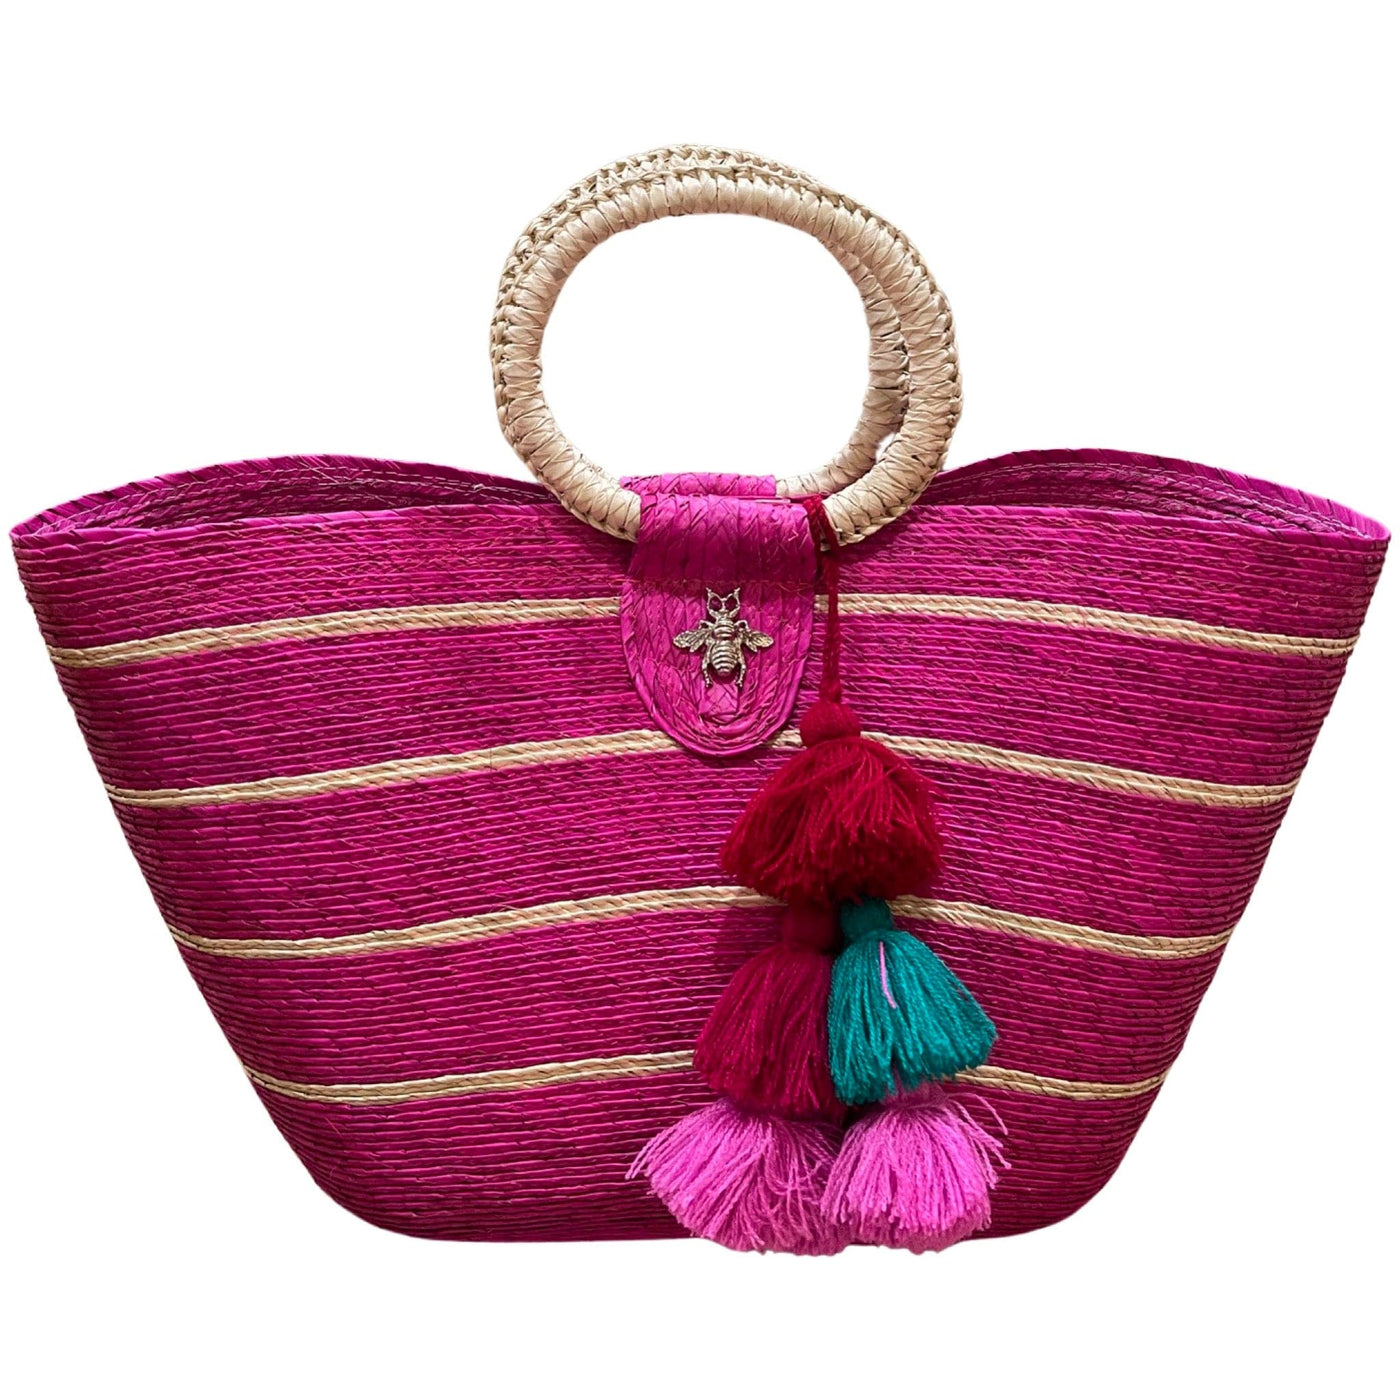 BeeLoved Custom Artisan Bags and Gifts Handbags Fuchsia Valerie Bag